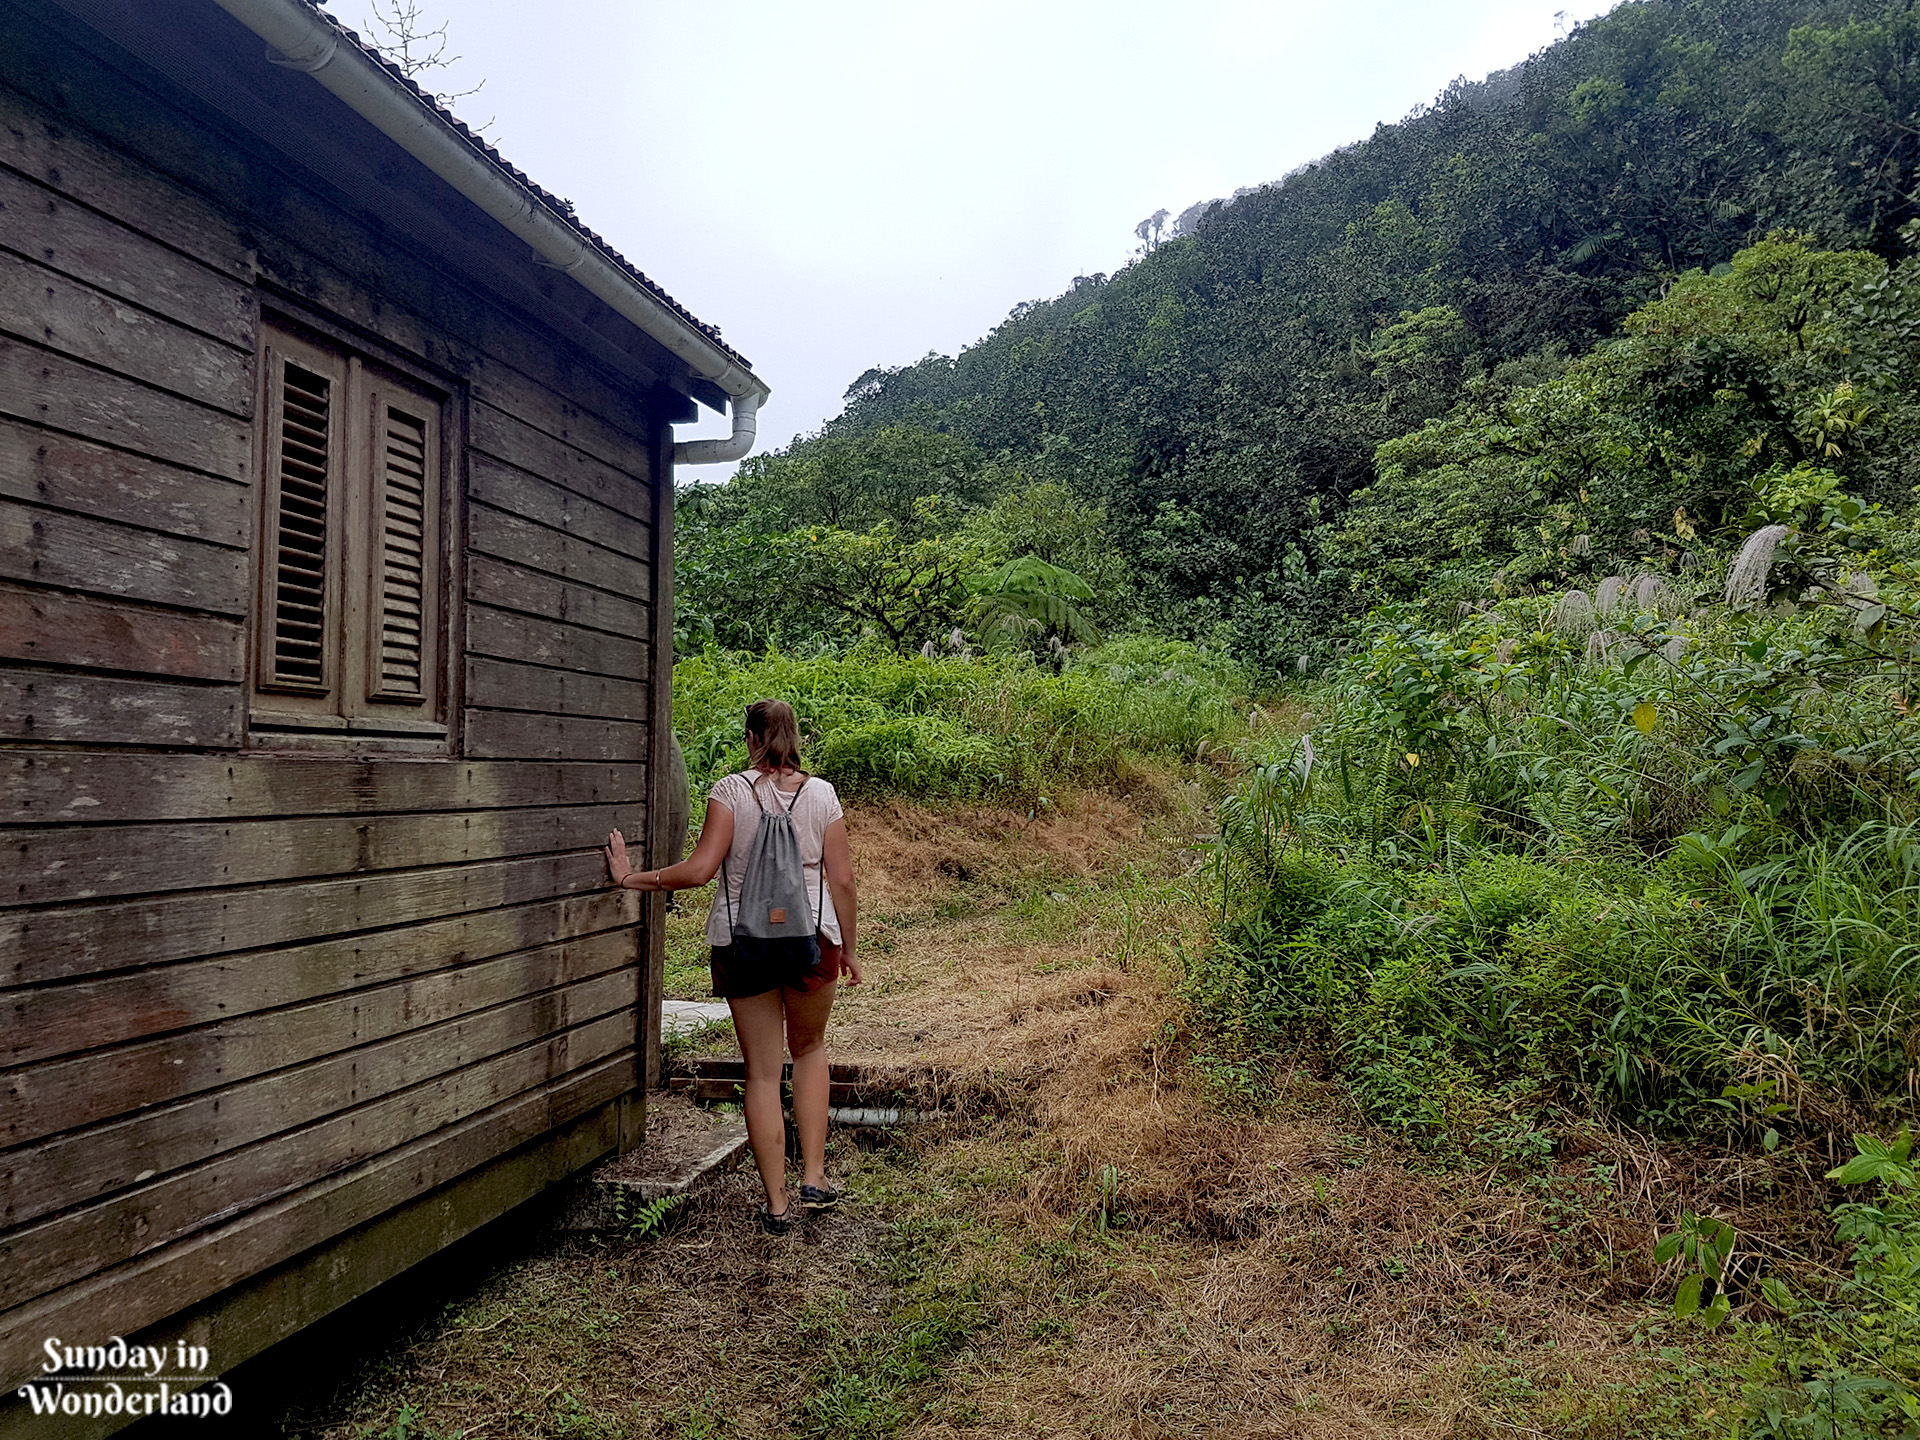 Creepy shelter on the mountain side - La Citerne - Guadeloupe - Sunday in Wonderland Blog